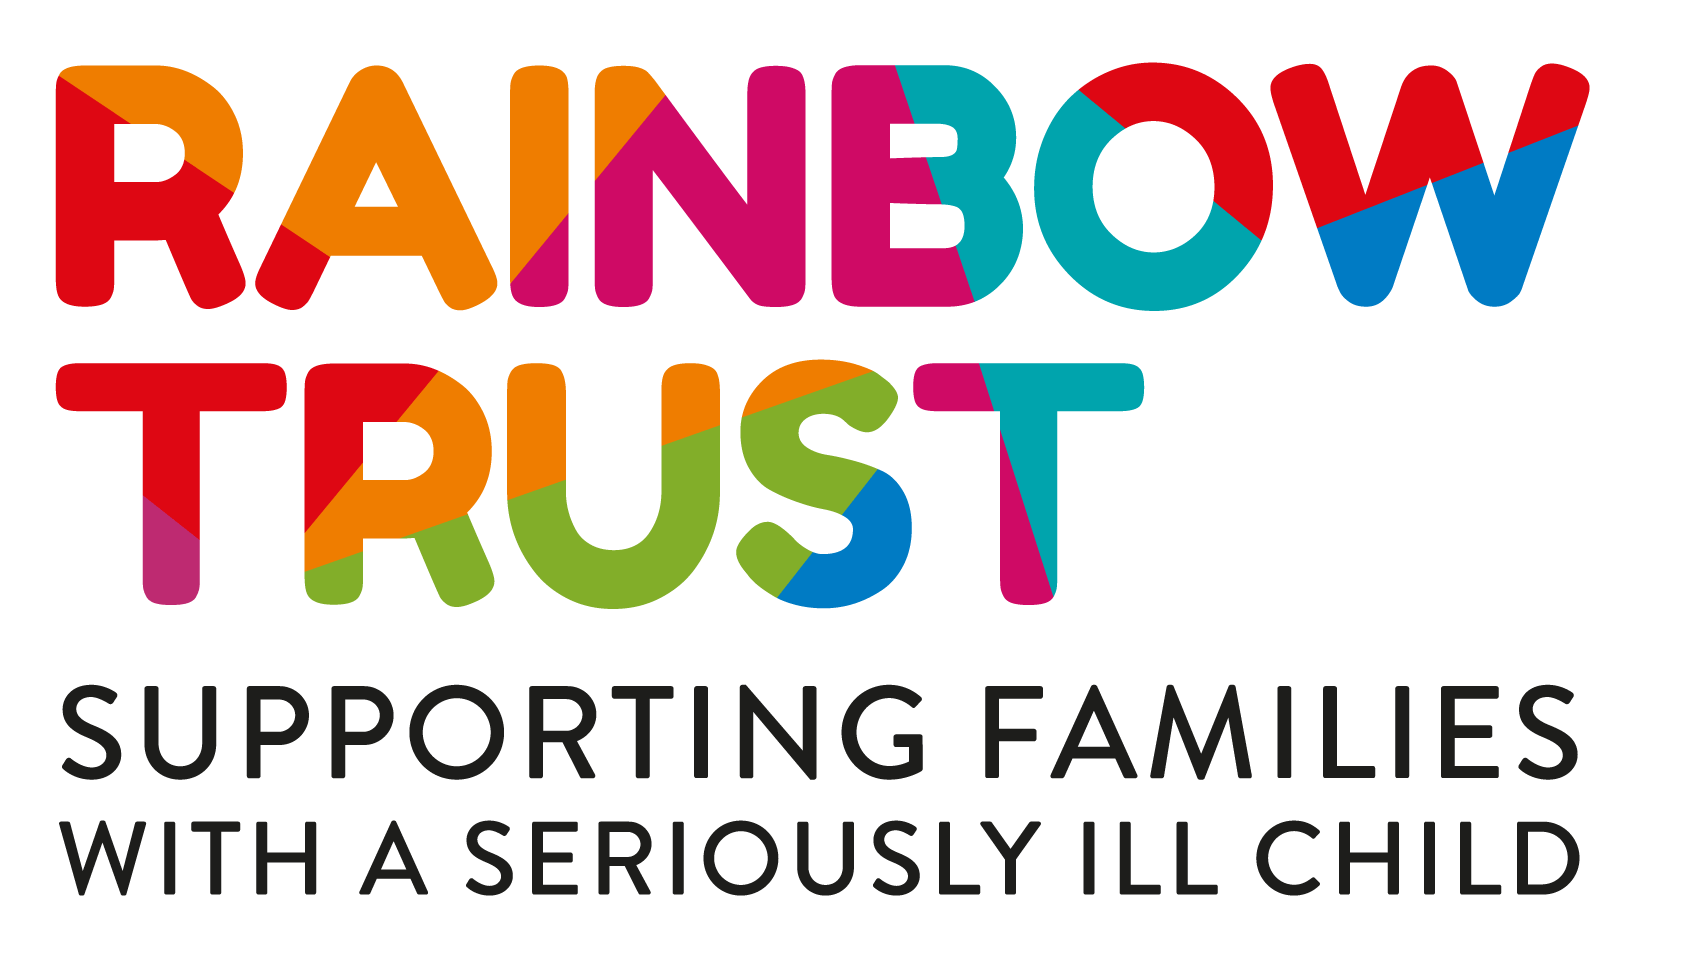 The Rainbow Trust